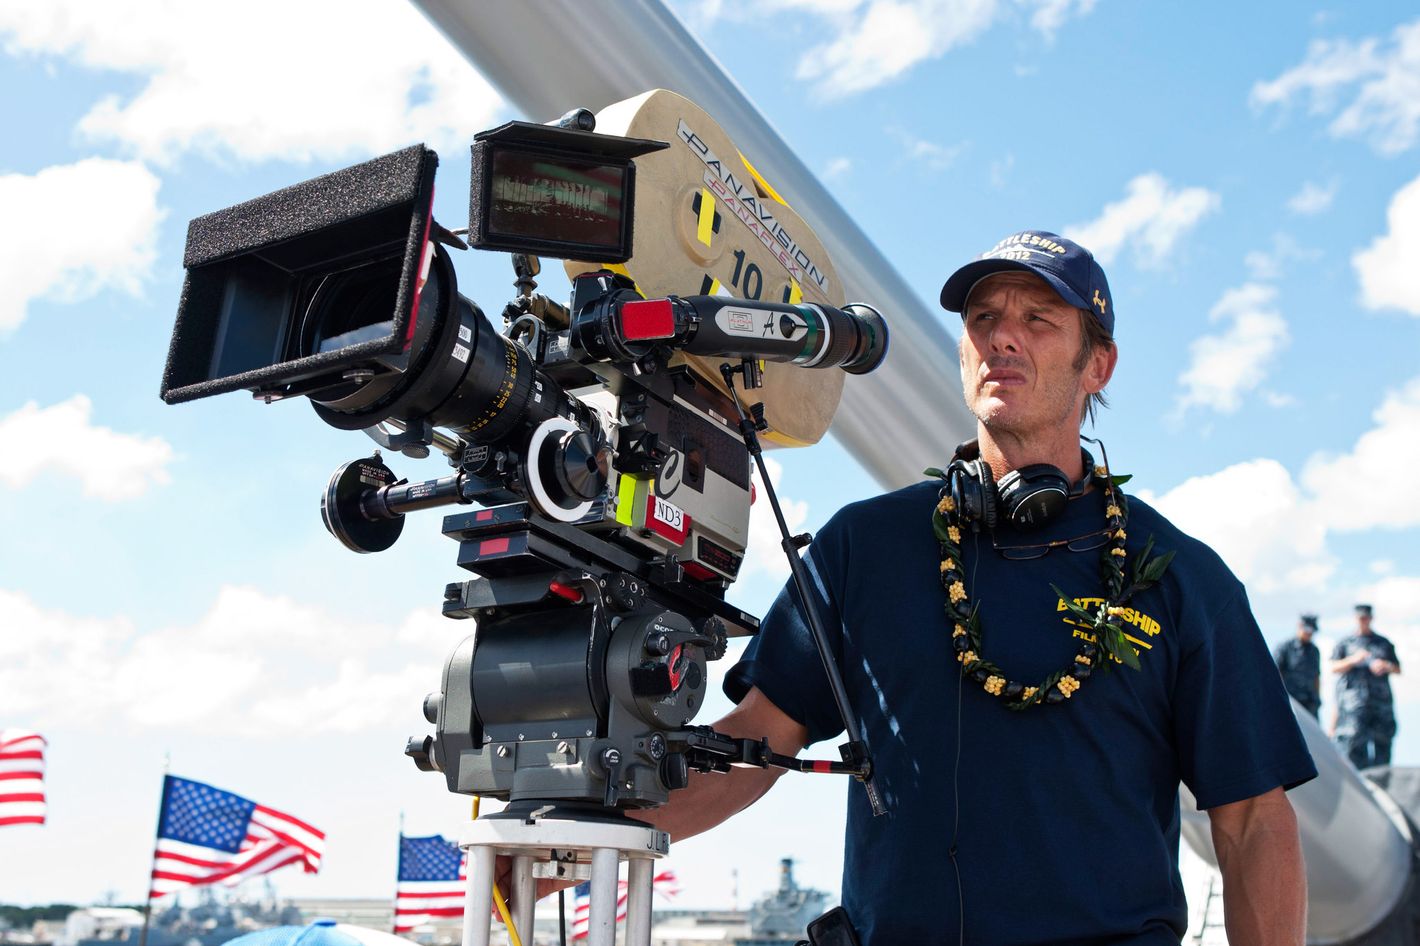 Director Peter Berg tells 'Lone Survivor' story as real as